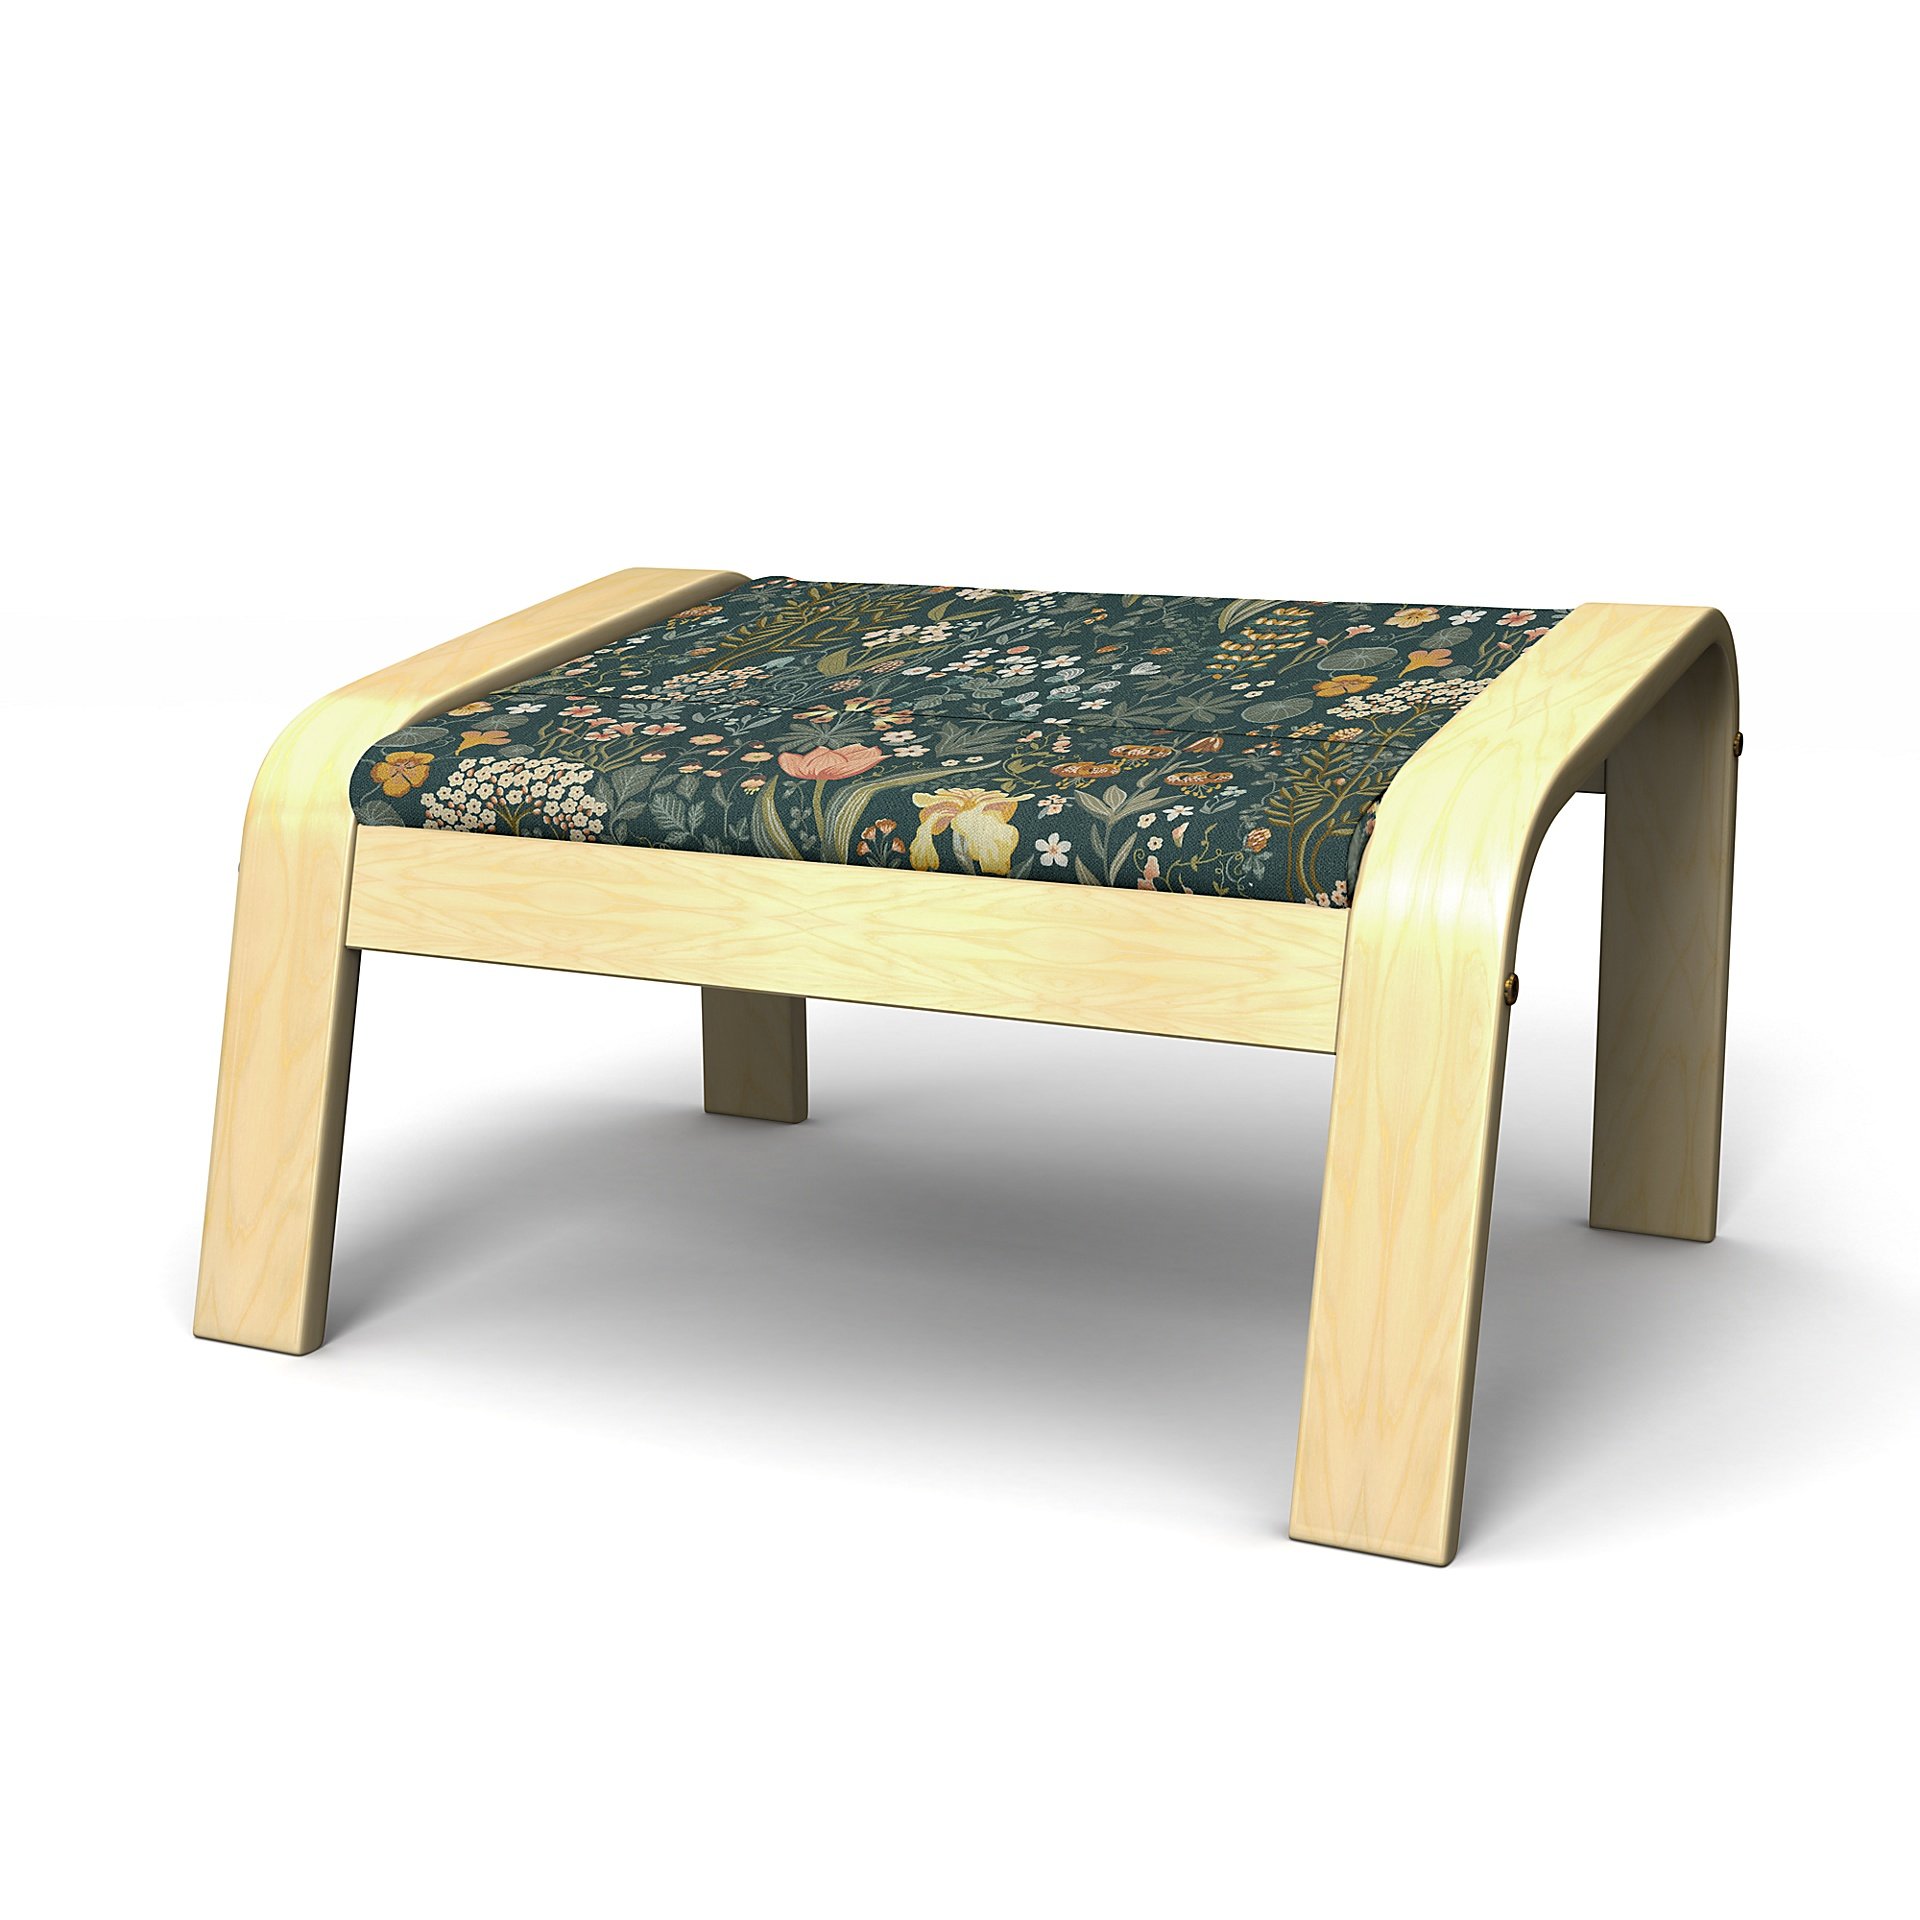 IKEA - Poang Footstool Cover, Blomsterhav Dark, BEMZ x BORASTAPETER COLLECTION - Bemz